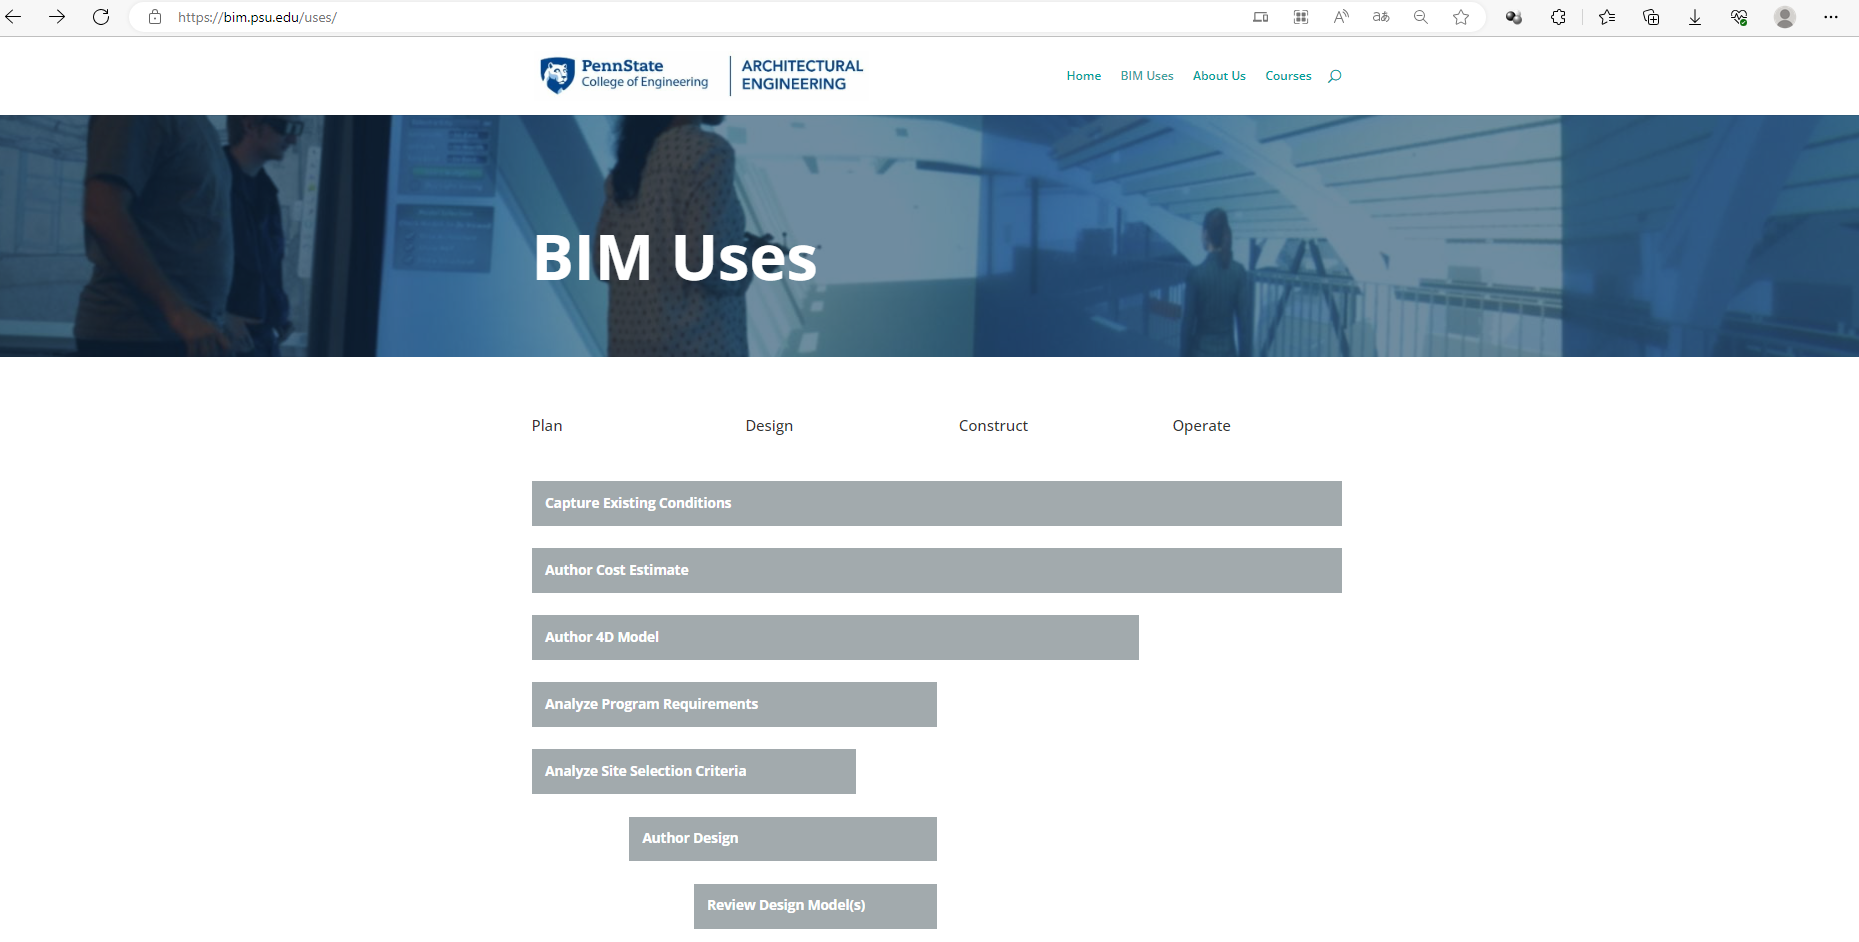 BIM Uses according to Penn State University, access: BIM Uses | BIM Planning (psu.edu) https://bim.psu.edu/uses/